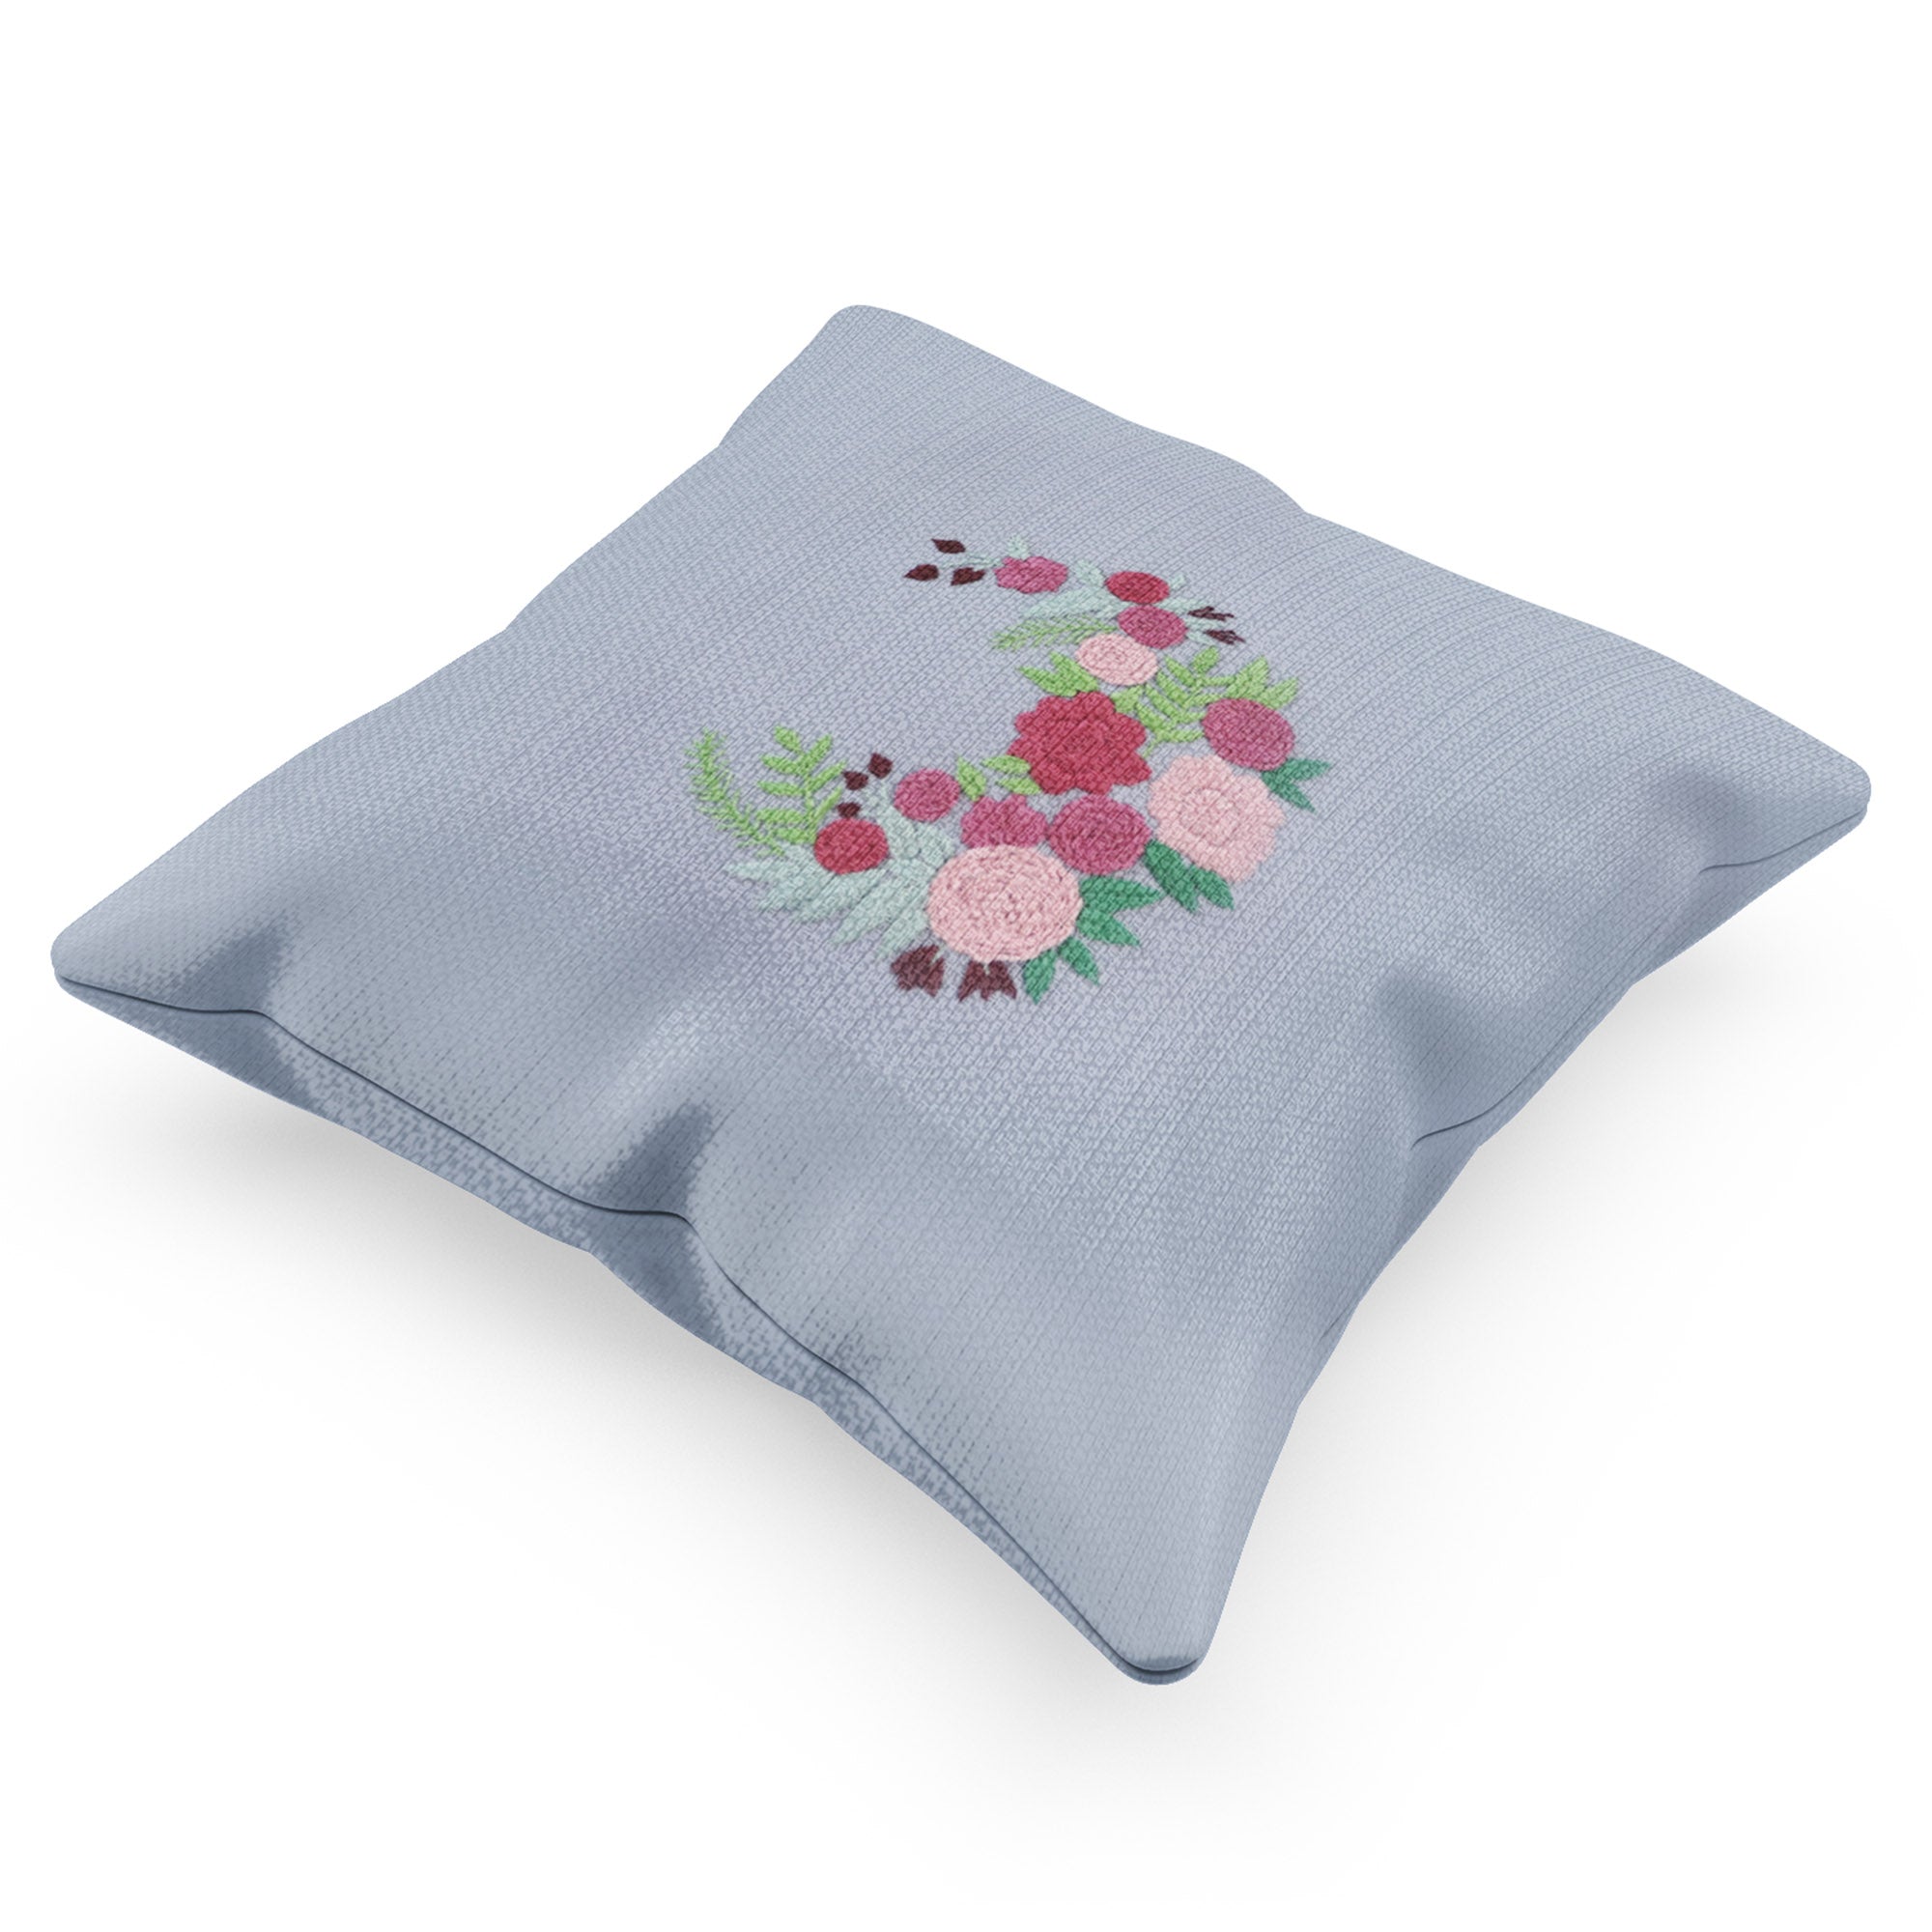 Mia Hand Embroidered Cushion